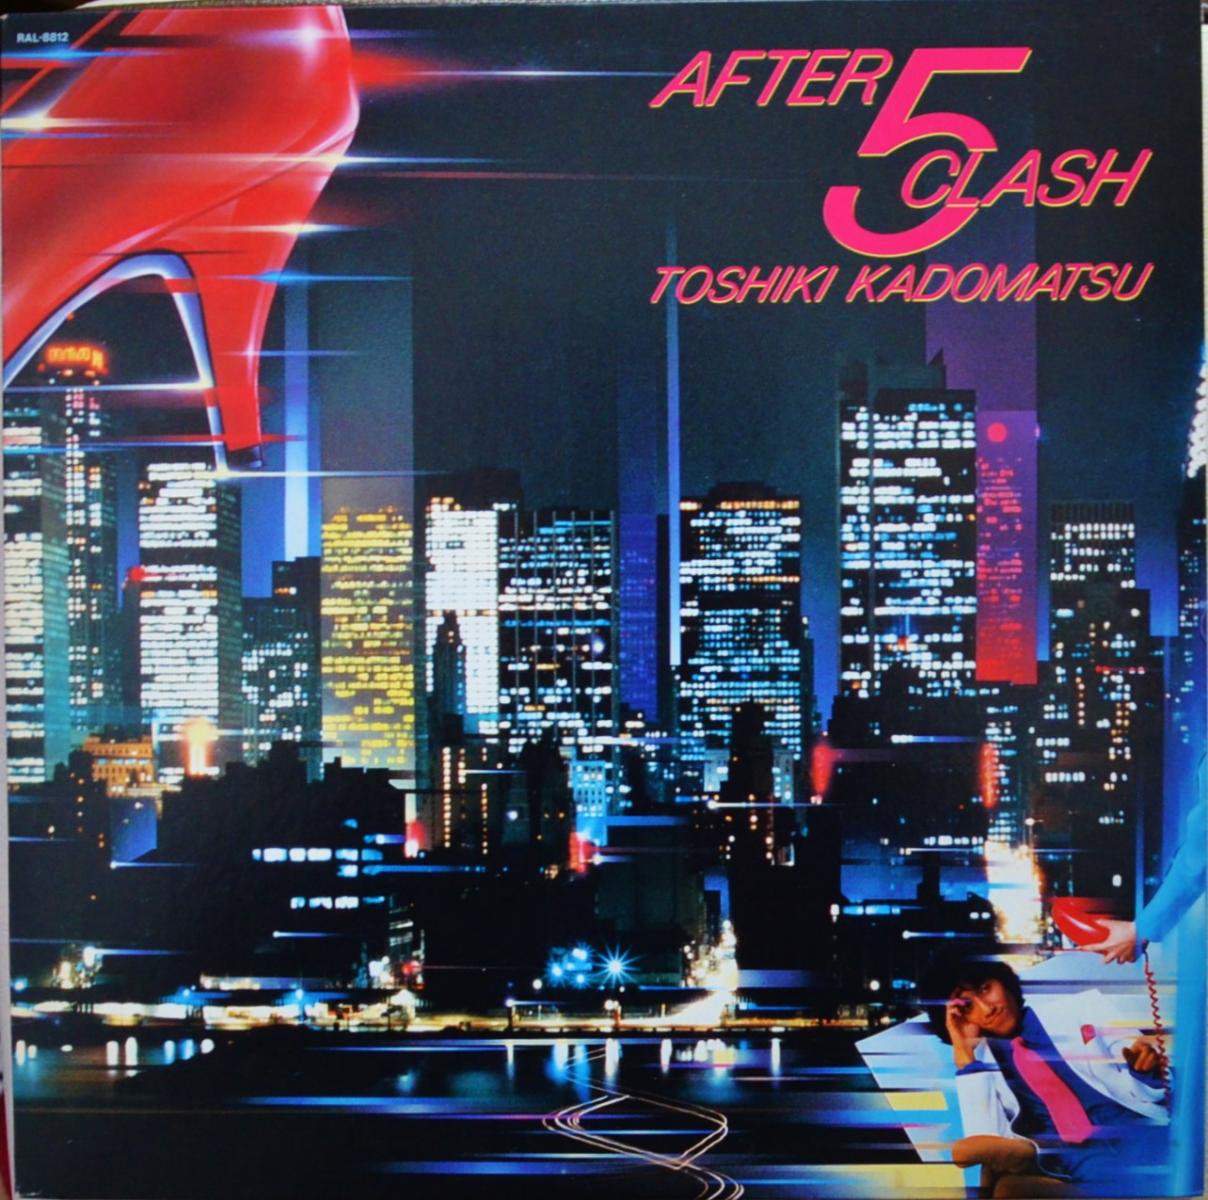 角松敏生 TOSHIKI KADOMATSU / AFTER 5 CLASH (LP)